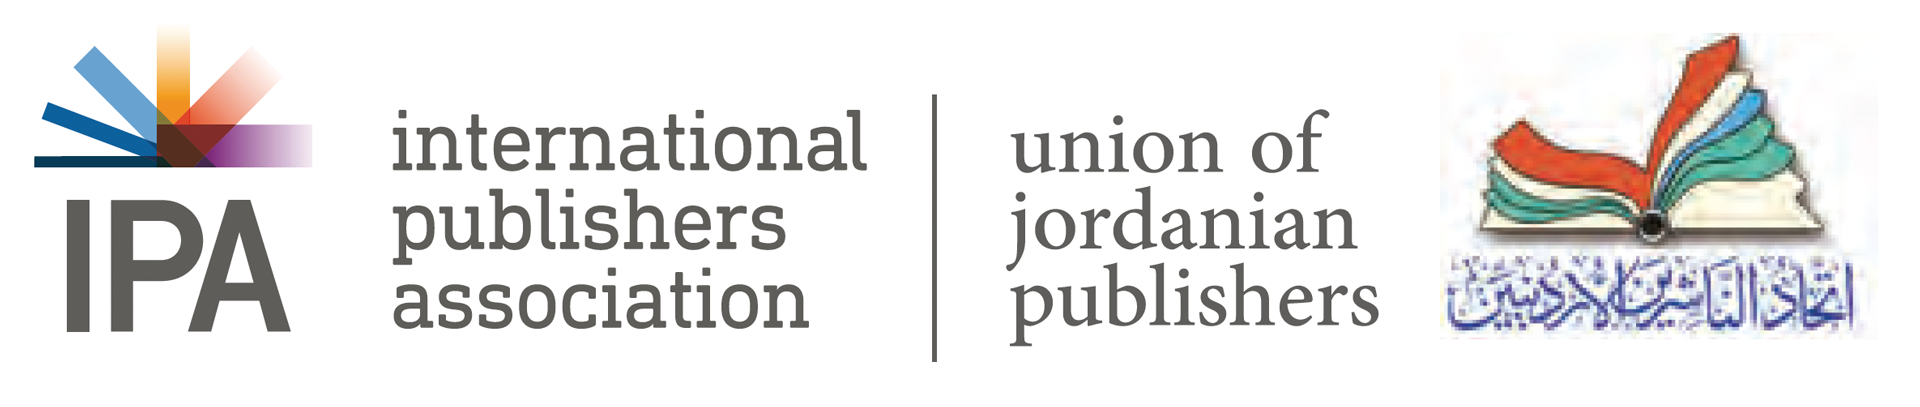 Logo Composite IPA UJP